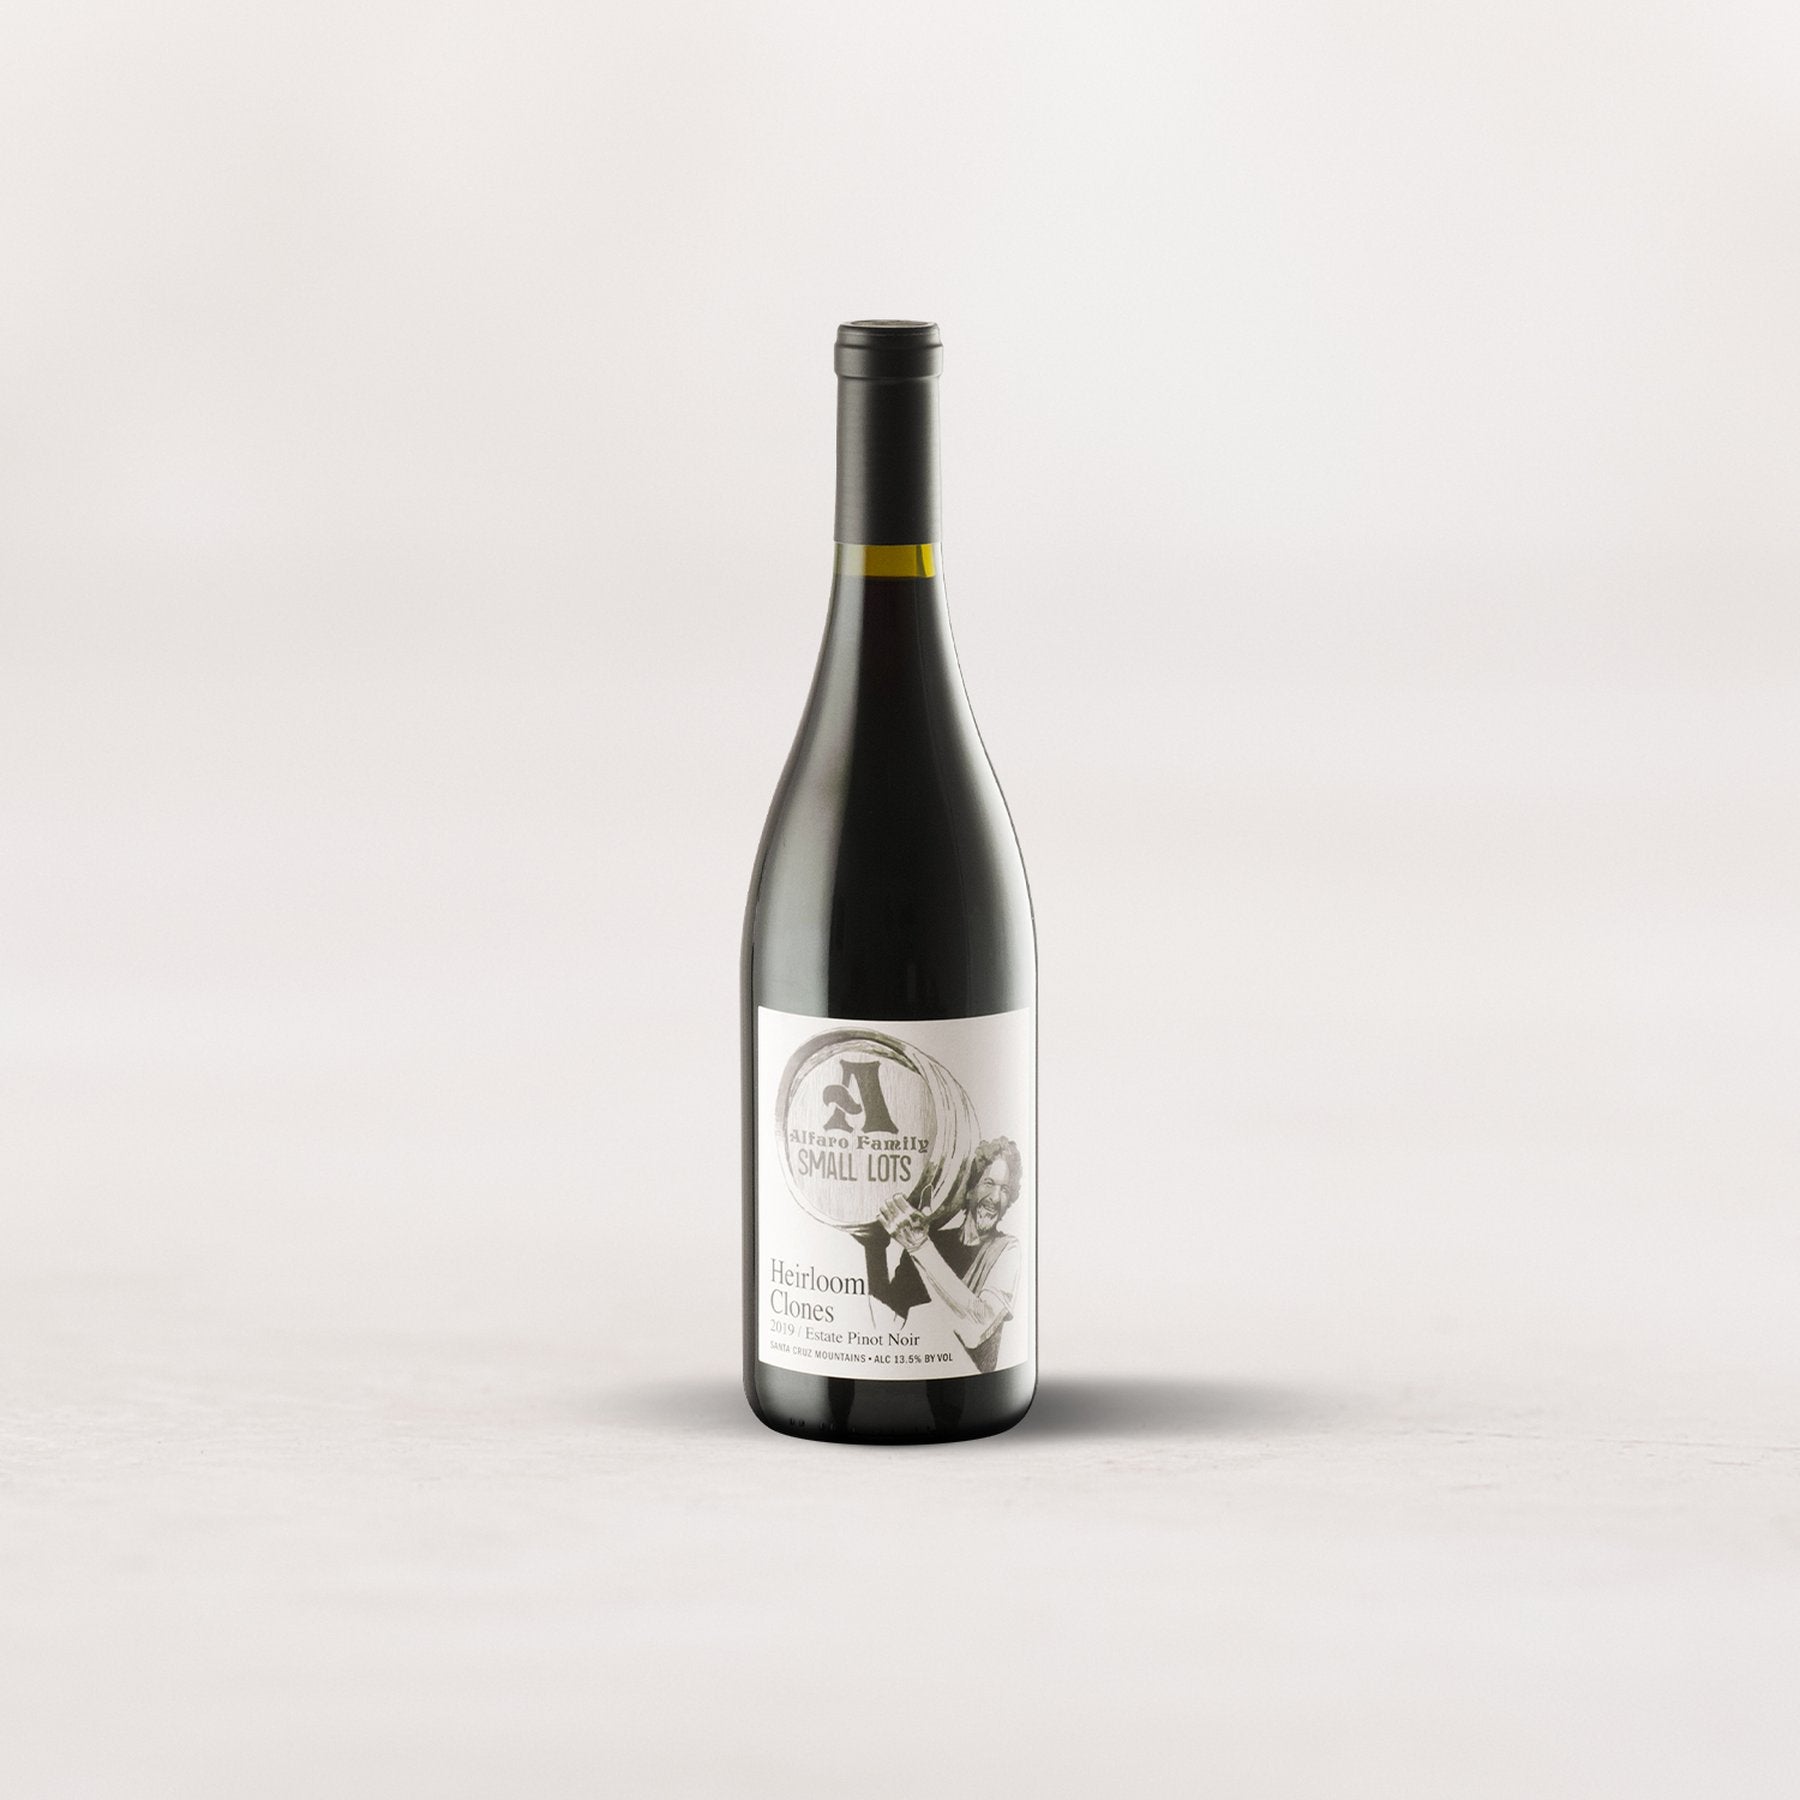 Alfaro Family Vineyards, “Heirloom Clones” Pinot Noir